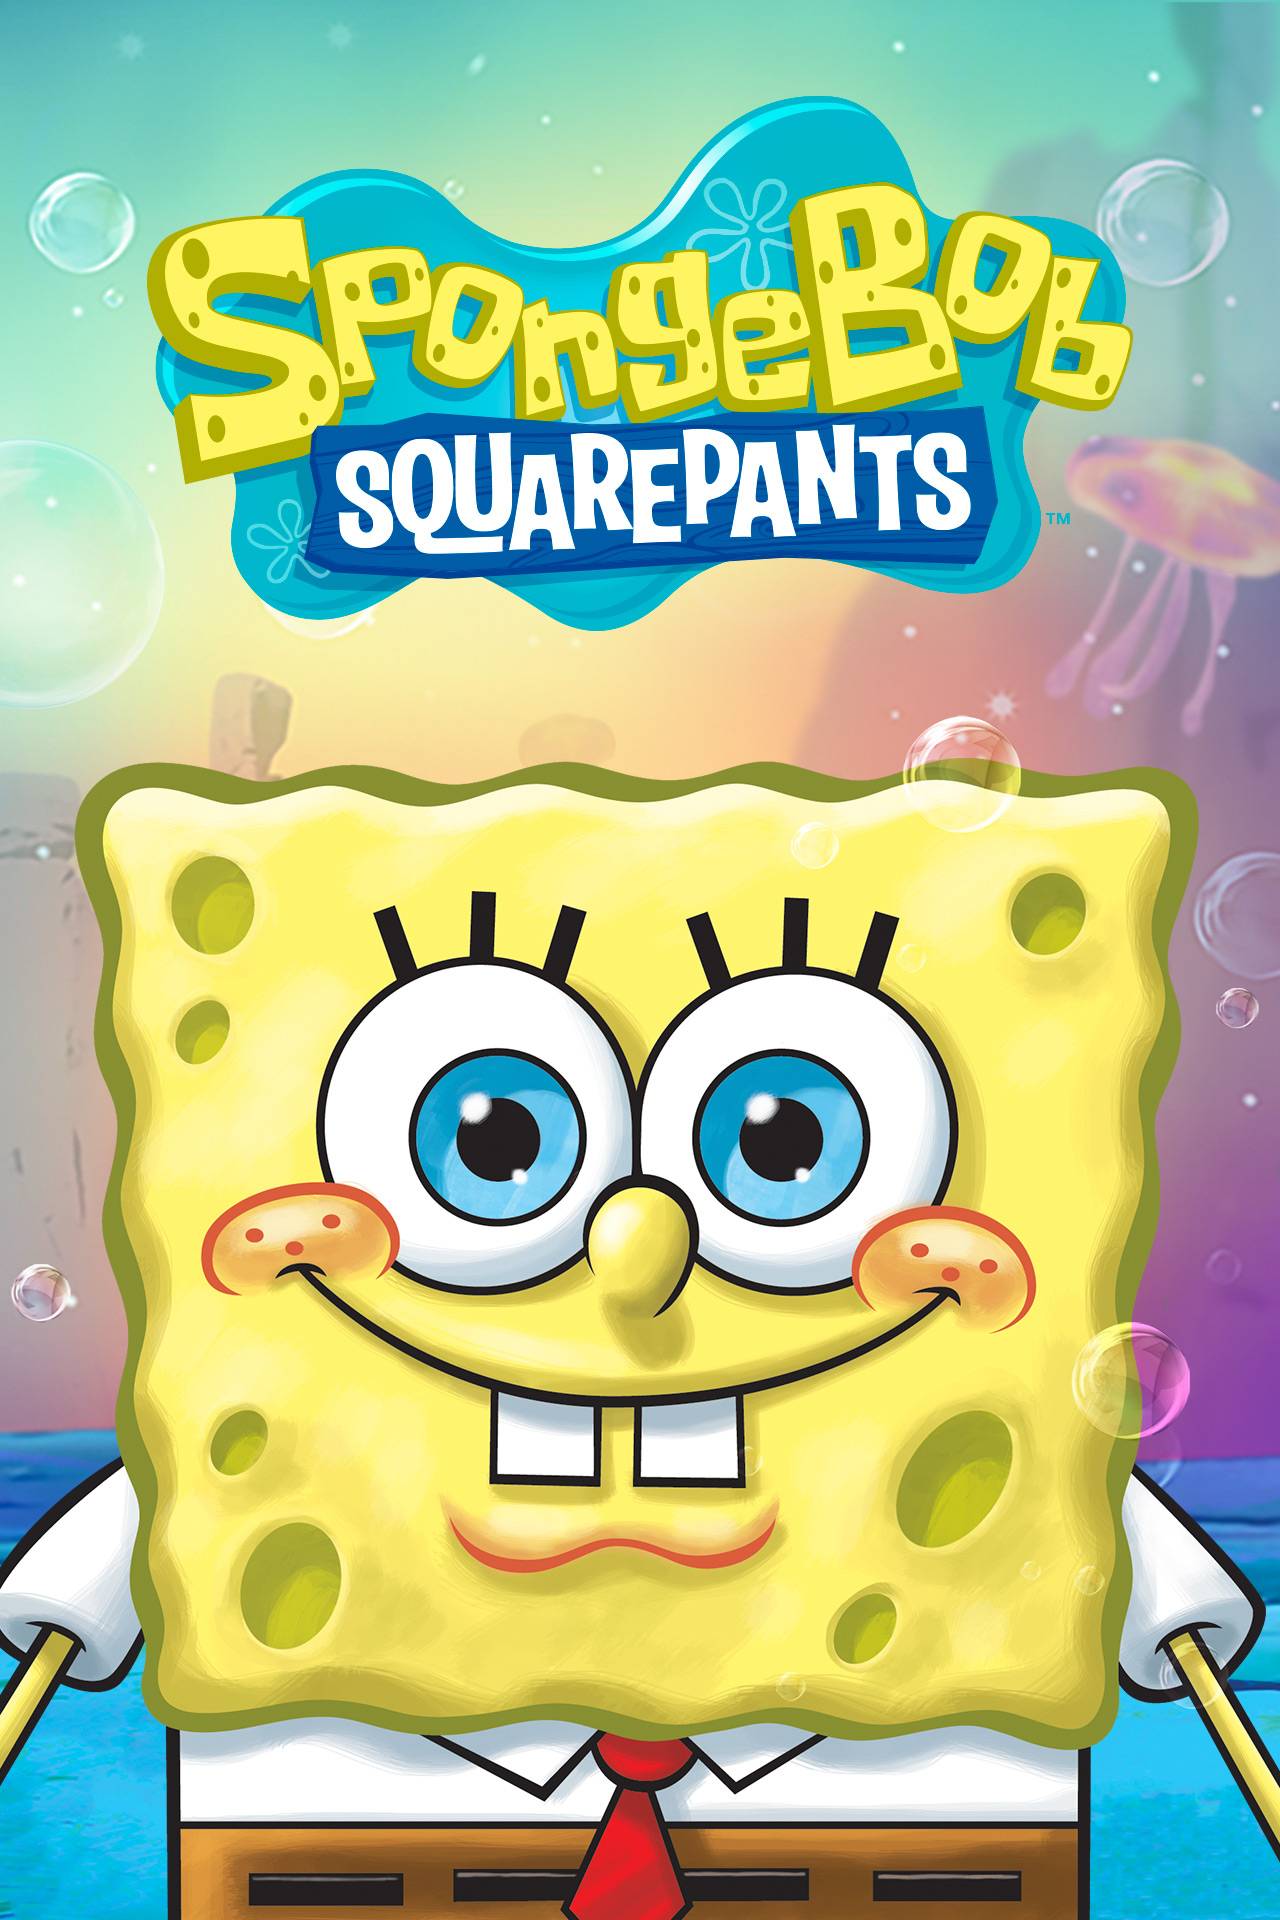 Stiahni si Filmy Kreslené Spongebob Kolekce (CZ)[720p] = CSFD 76%